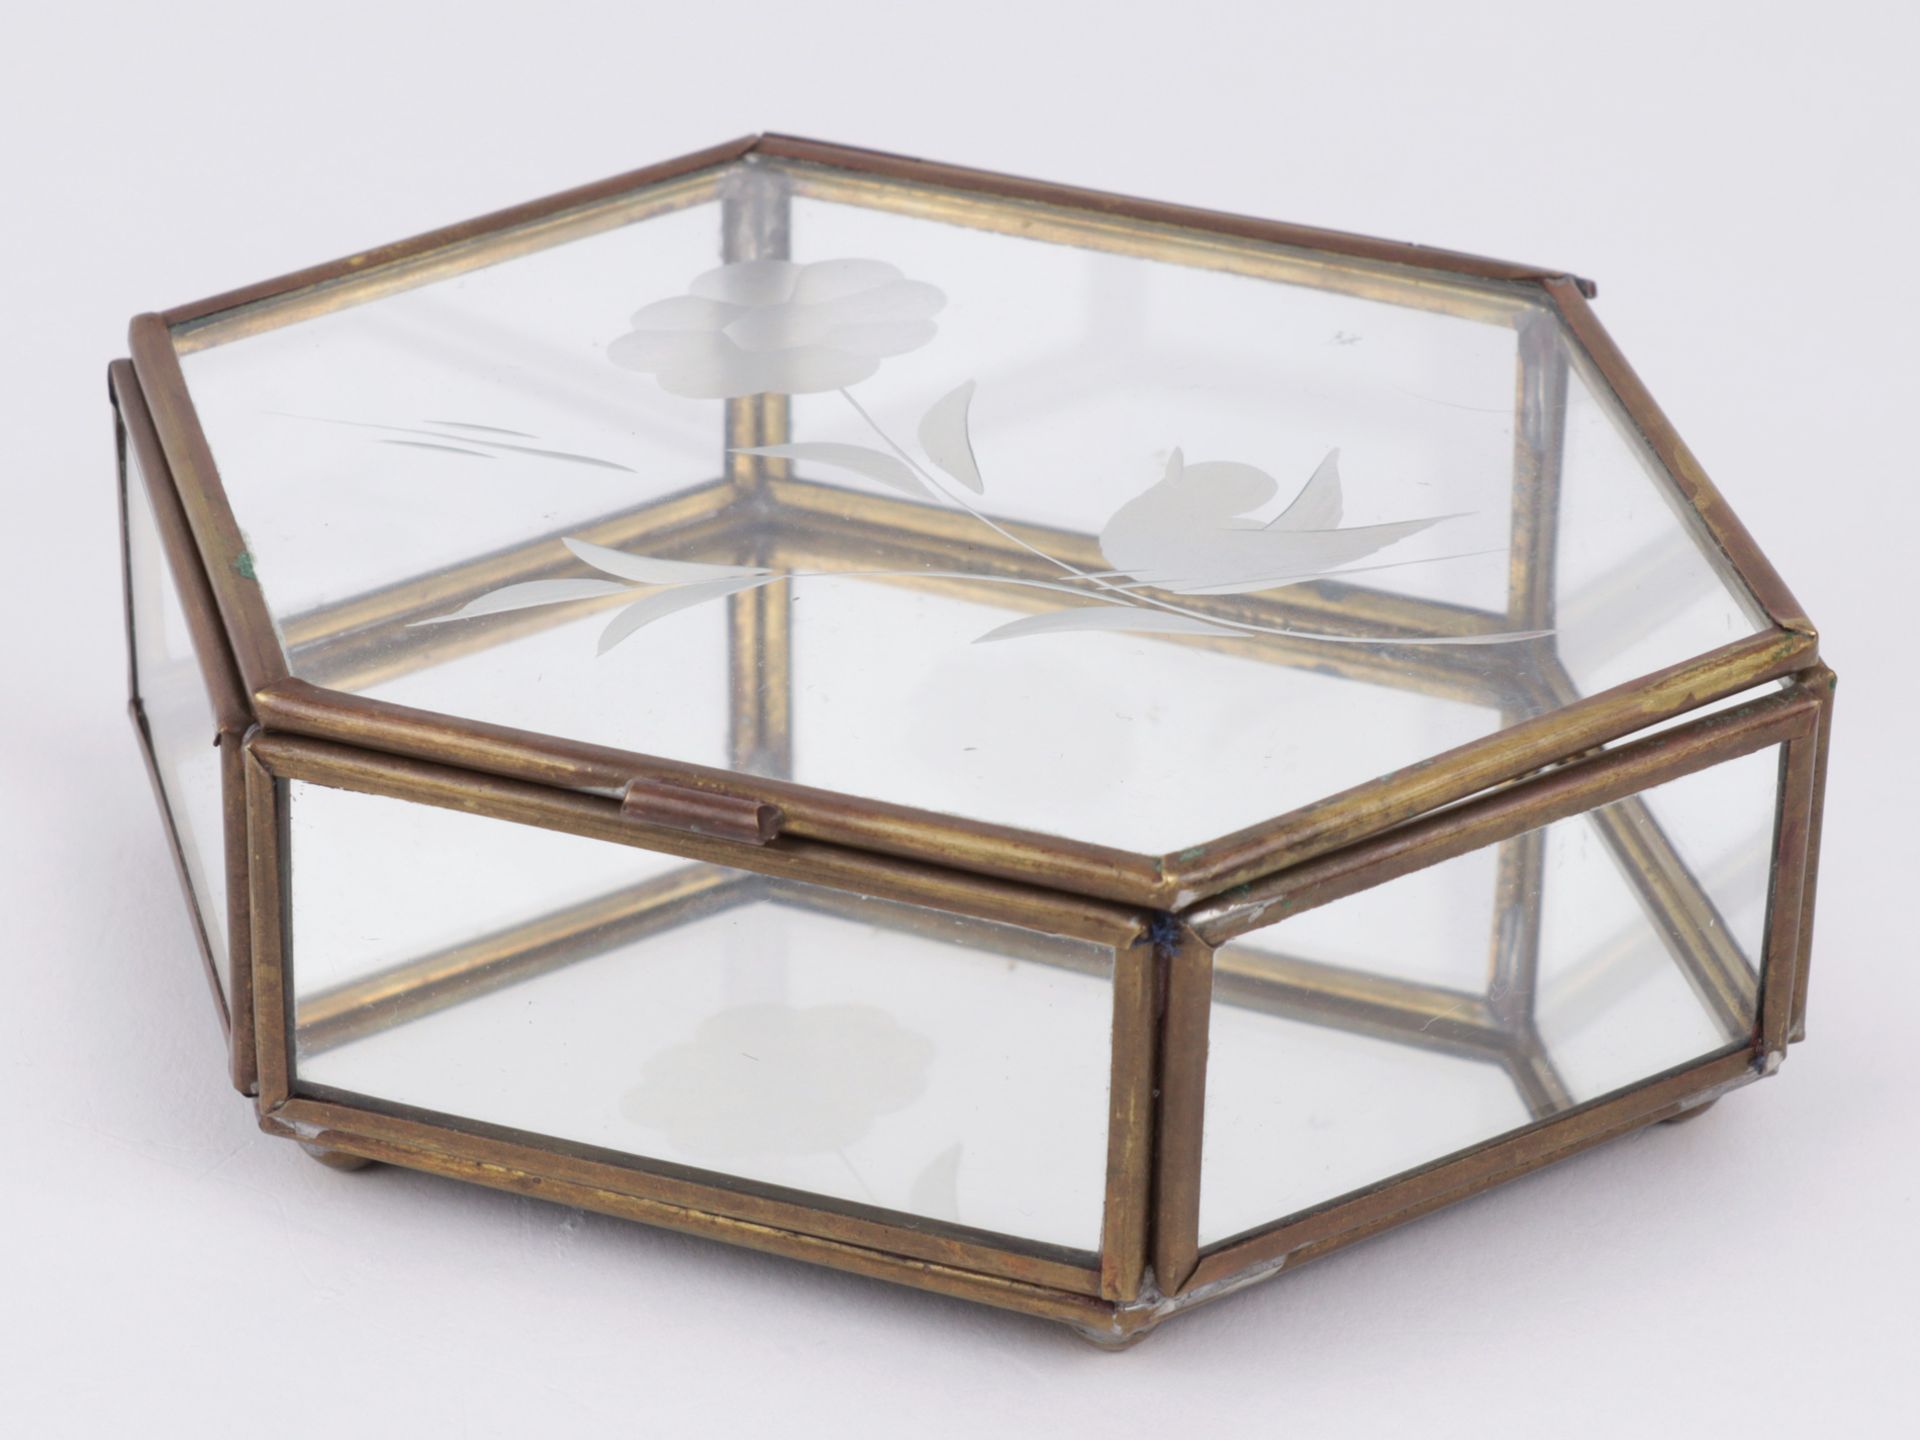 Jugendstil - Deckeldose Glas/Messing, geschliffen/geätzt, hexagonaler Korpus, Innenbo